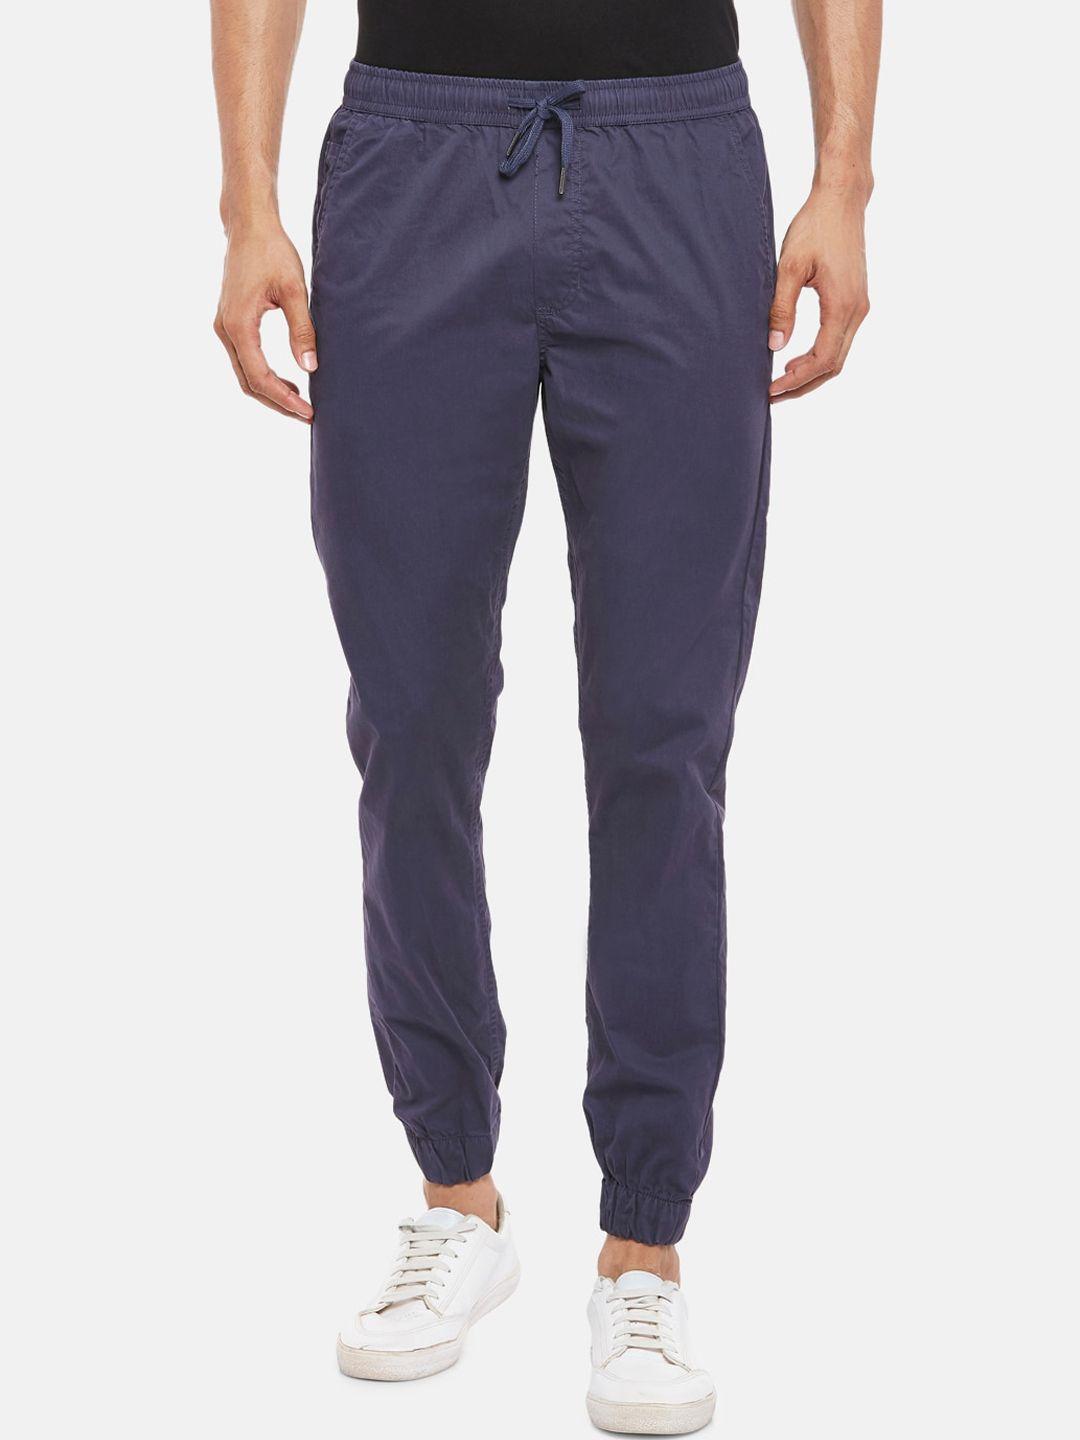 urban ranger by pantaloons men navy blue pure cotton slim fit joggers